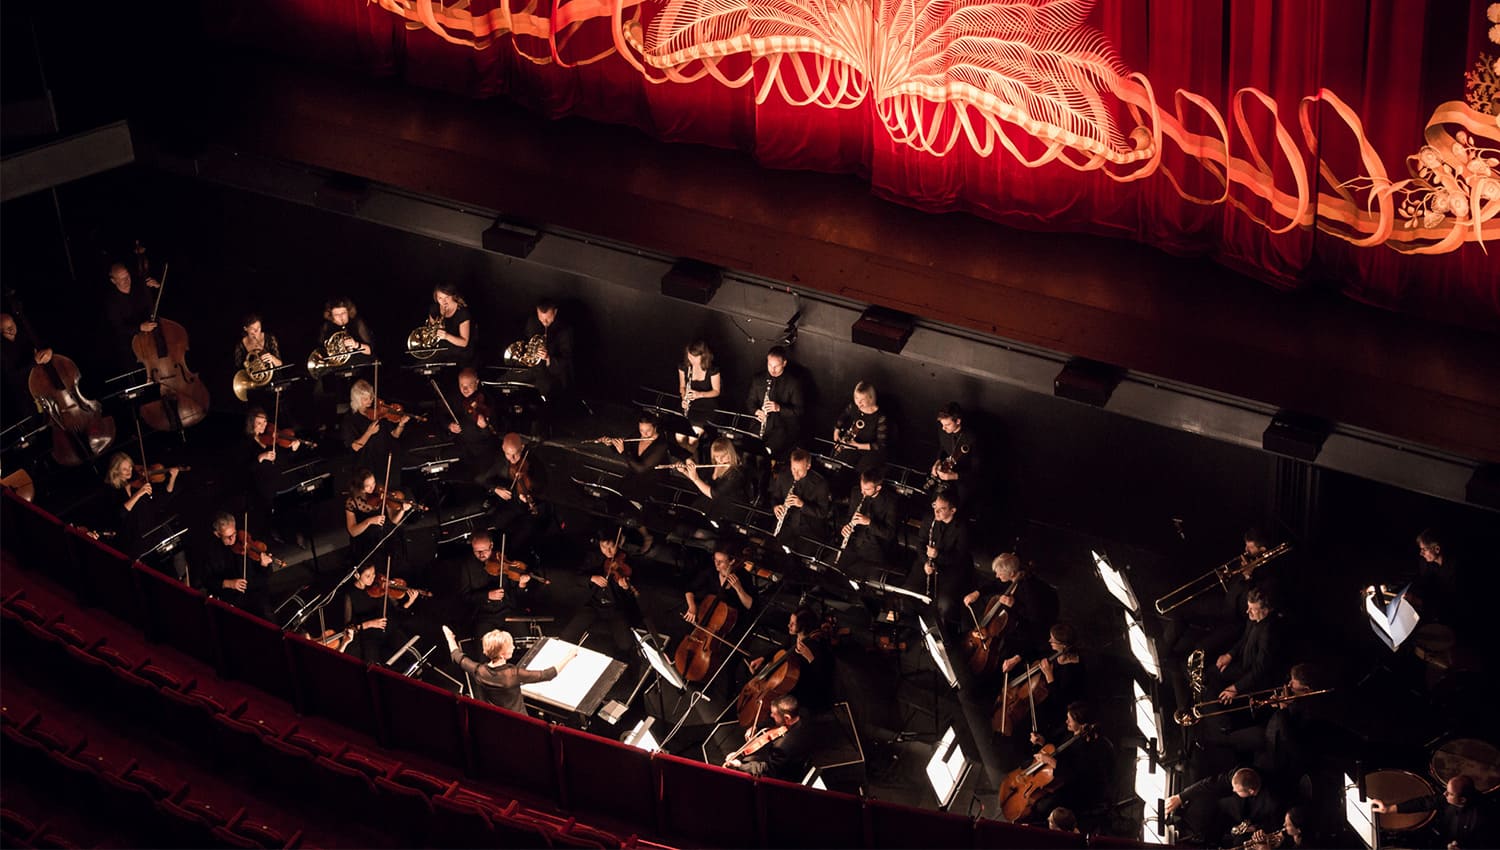 Orchestra Victoria now schedule their musicians, technicians and staff in #DIESE